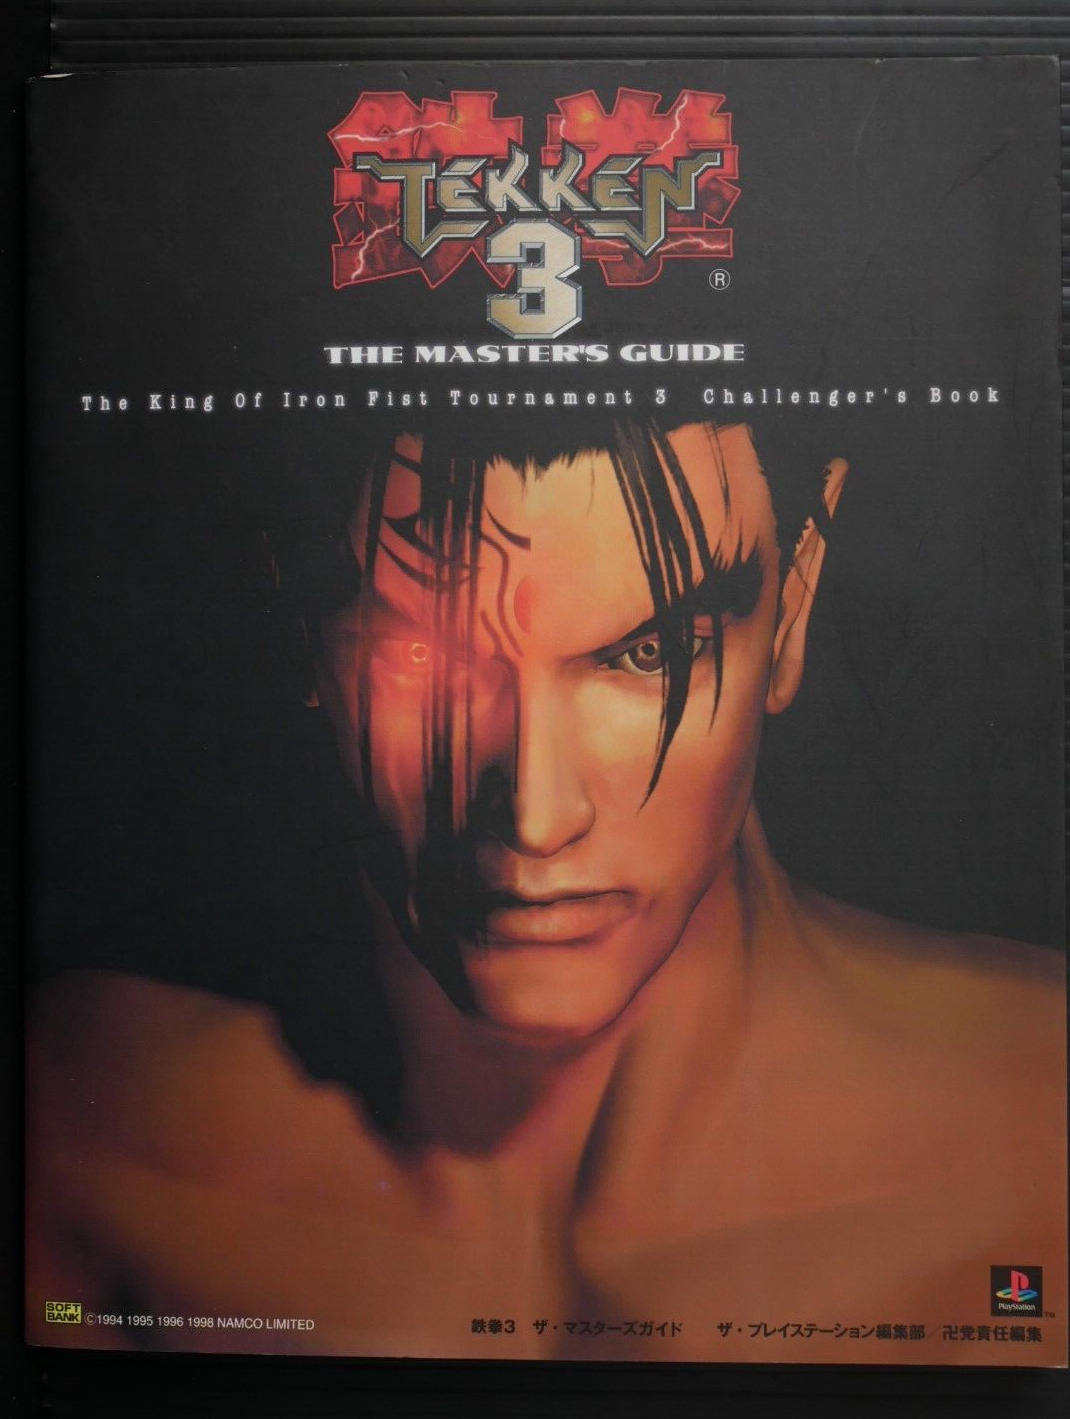 SHOHAN: Tekken 3 The Master\'s Guide The King Of Iron Fist Tournament 3 Challenge